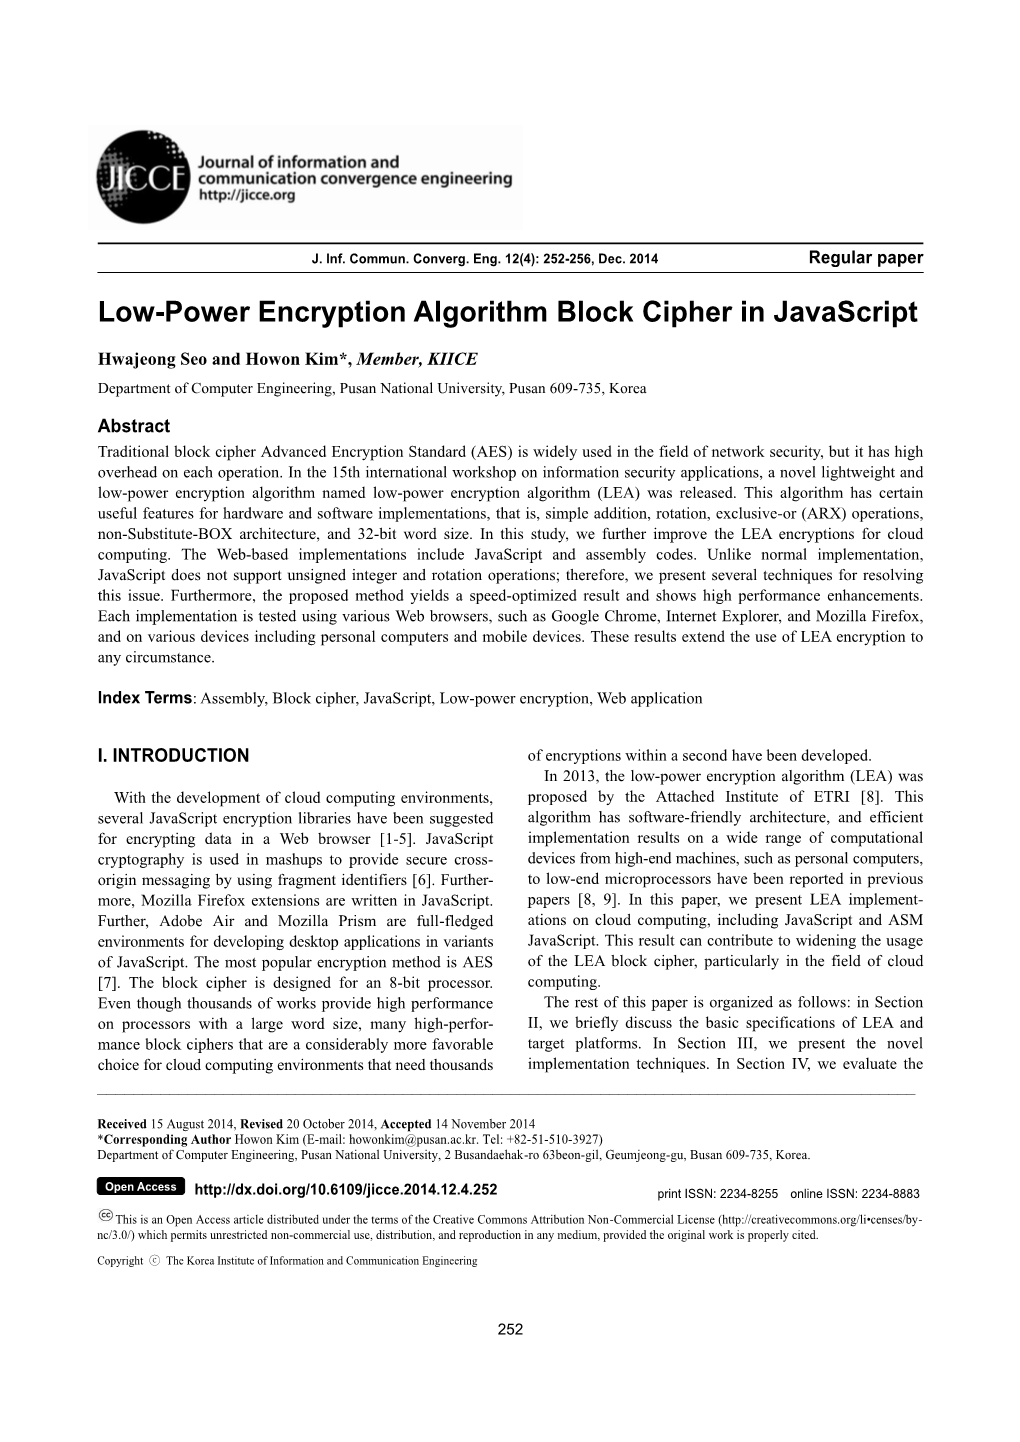 Low-Power Encryption Algorithm Block Cipher in Javascript